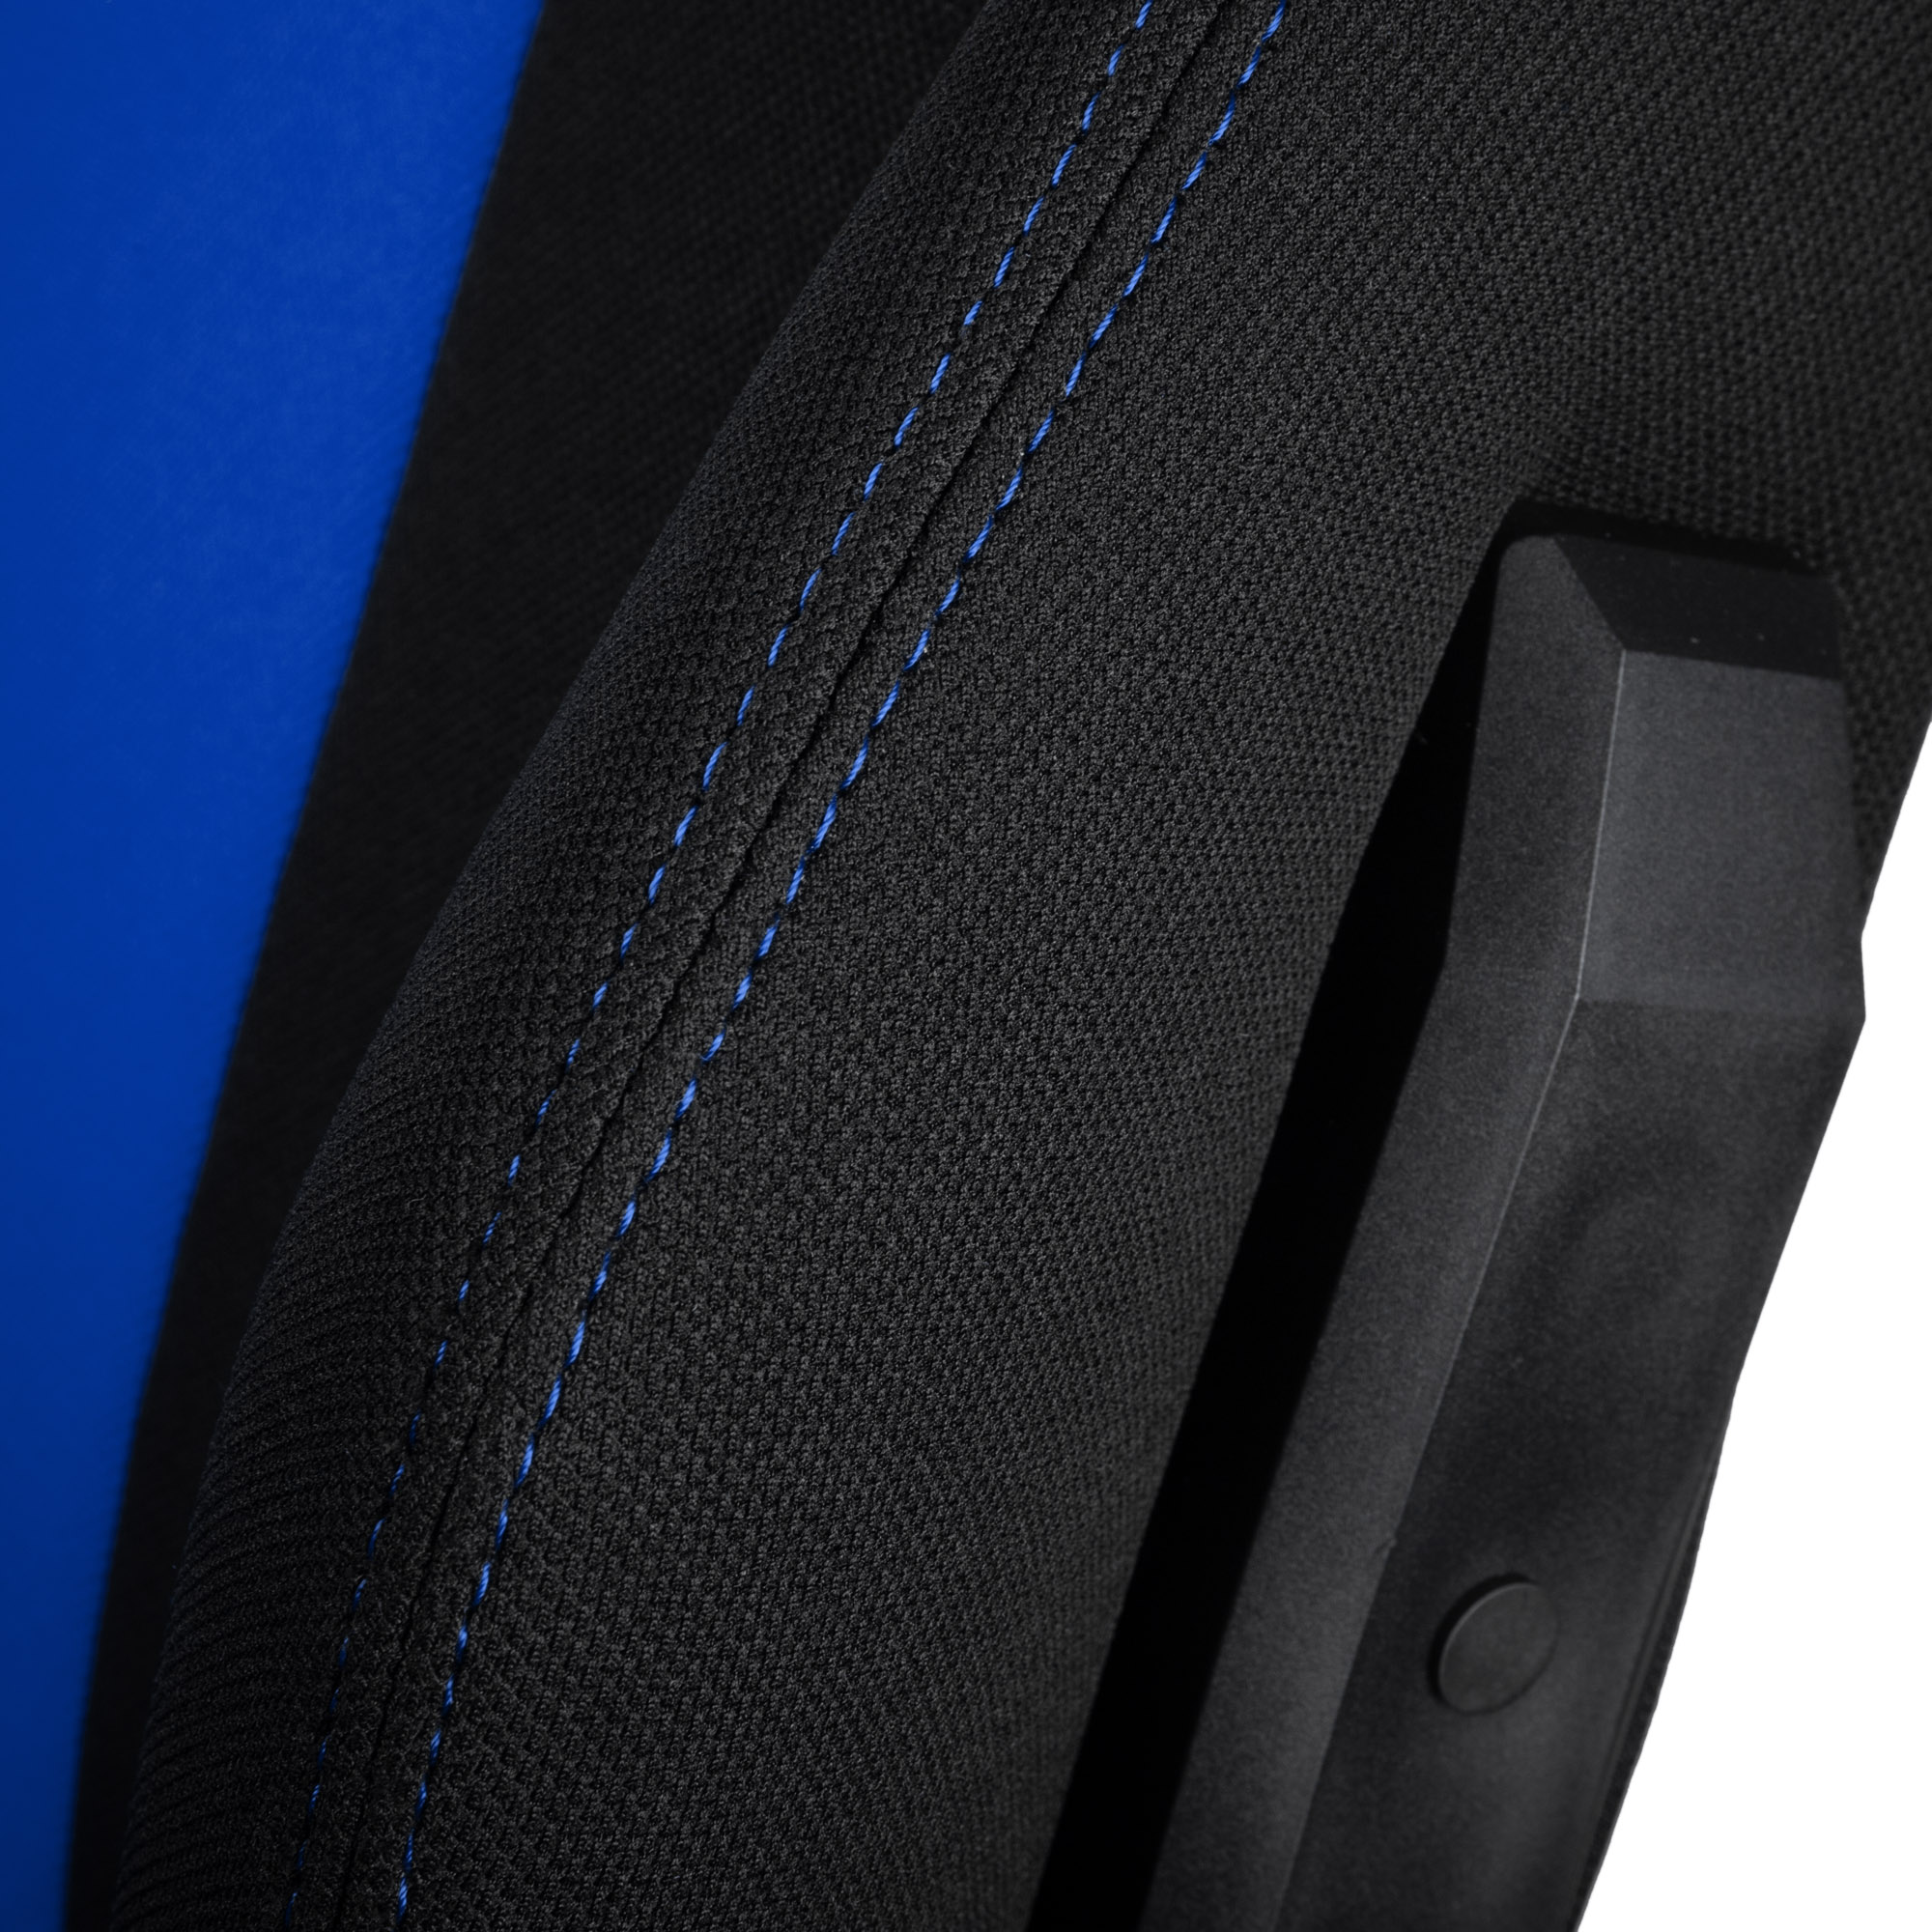 nitro-concepts - E250 Gaming Stuhl schwarz/blau